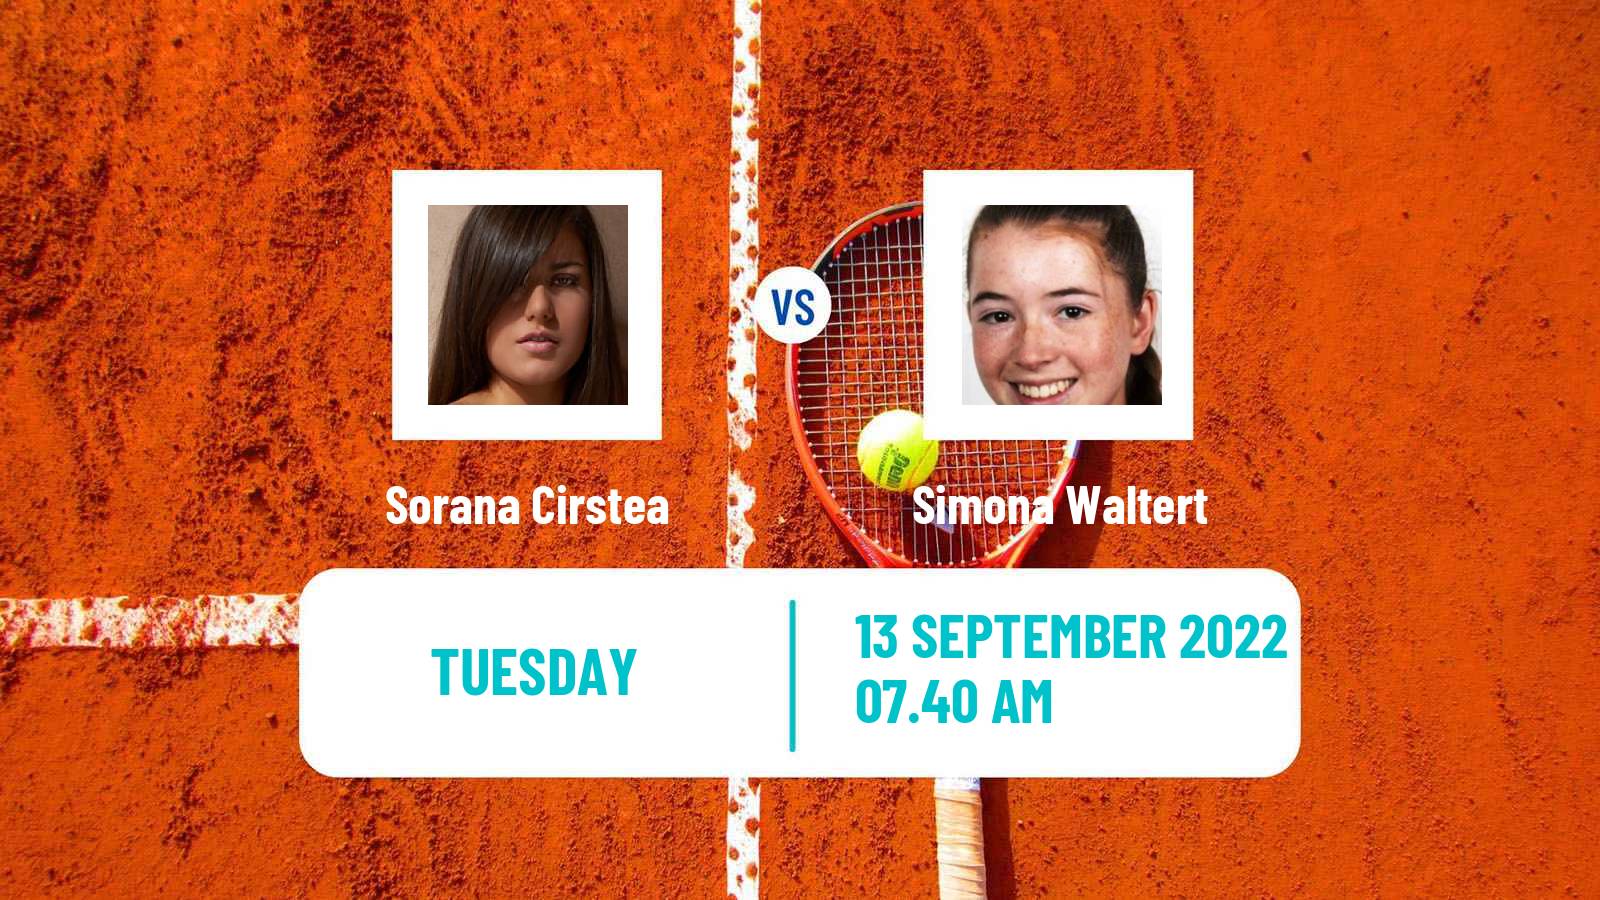 Tennis ATP Challenger Sorana Cirstea - Simona Waltert